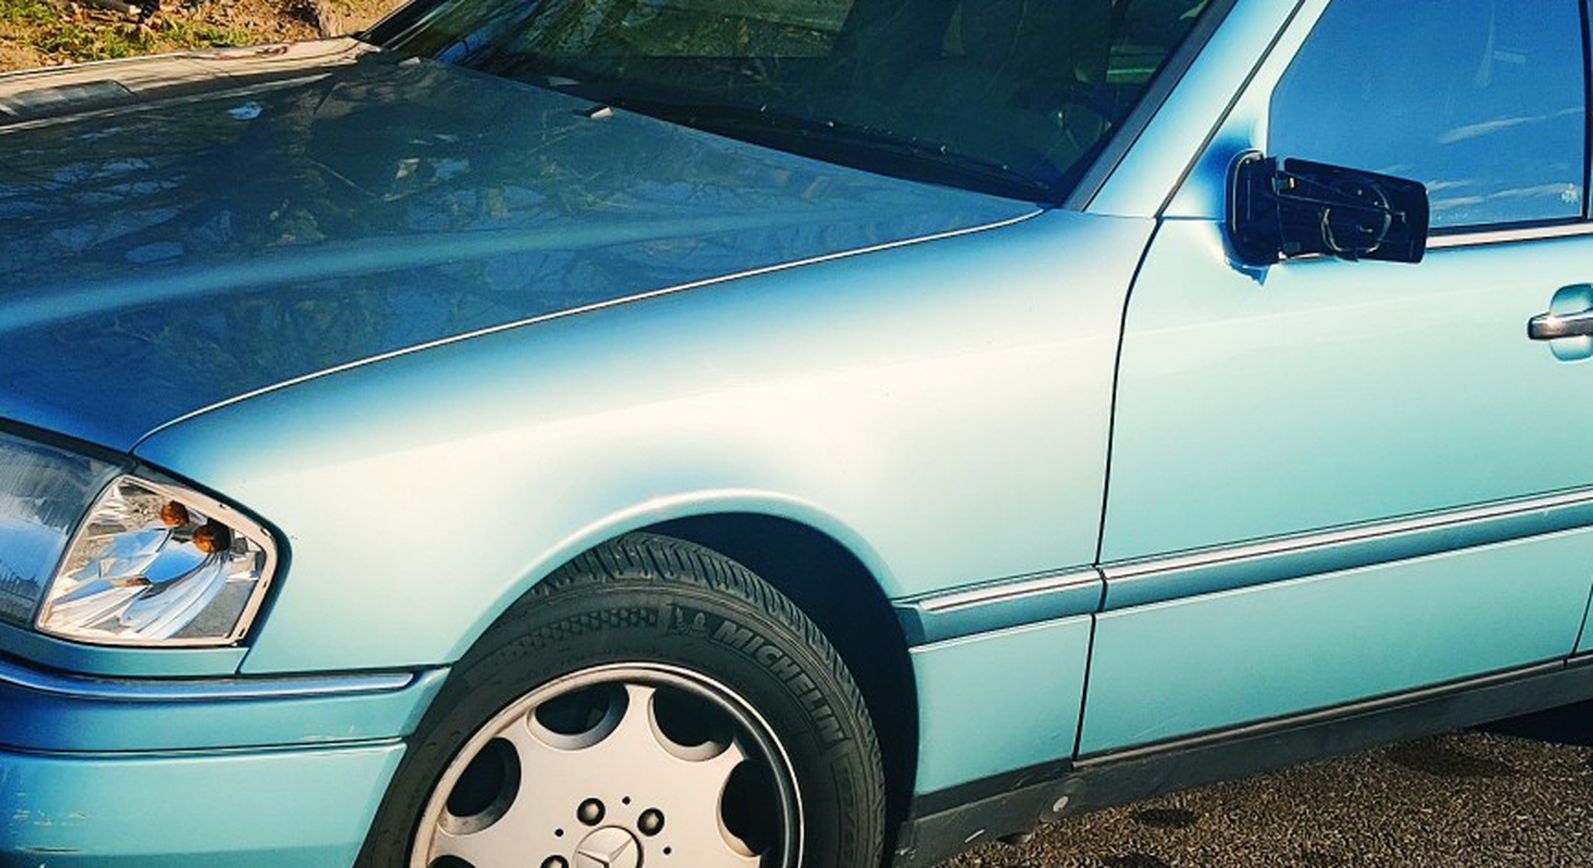 1994 Mercedes